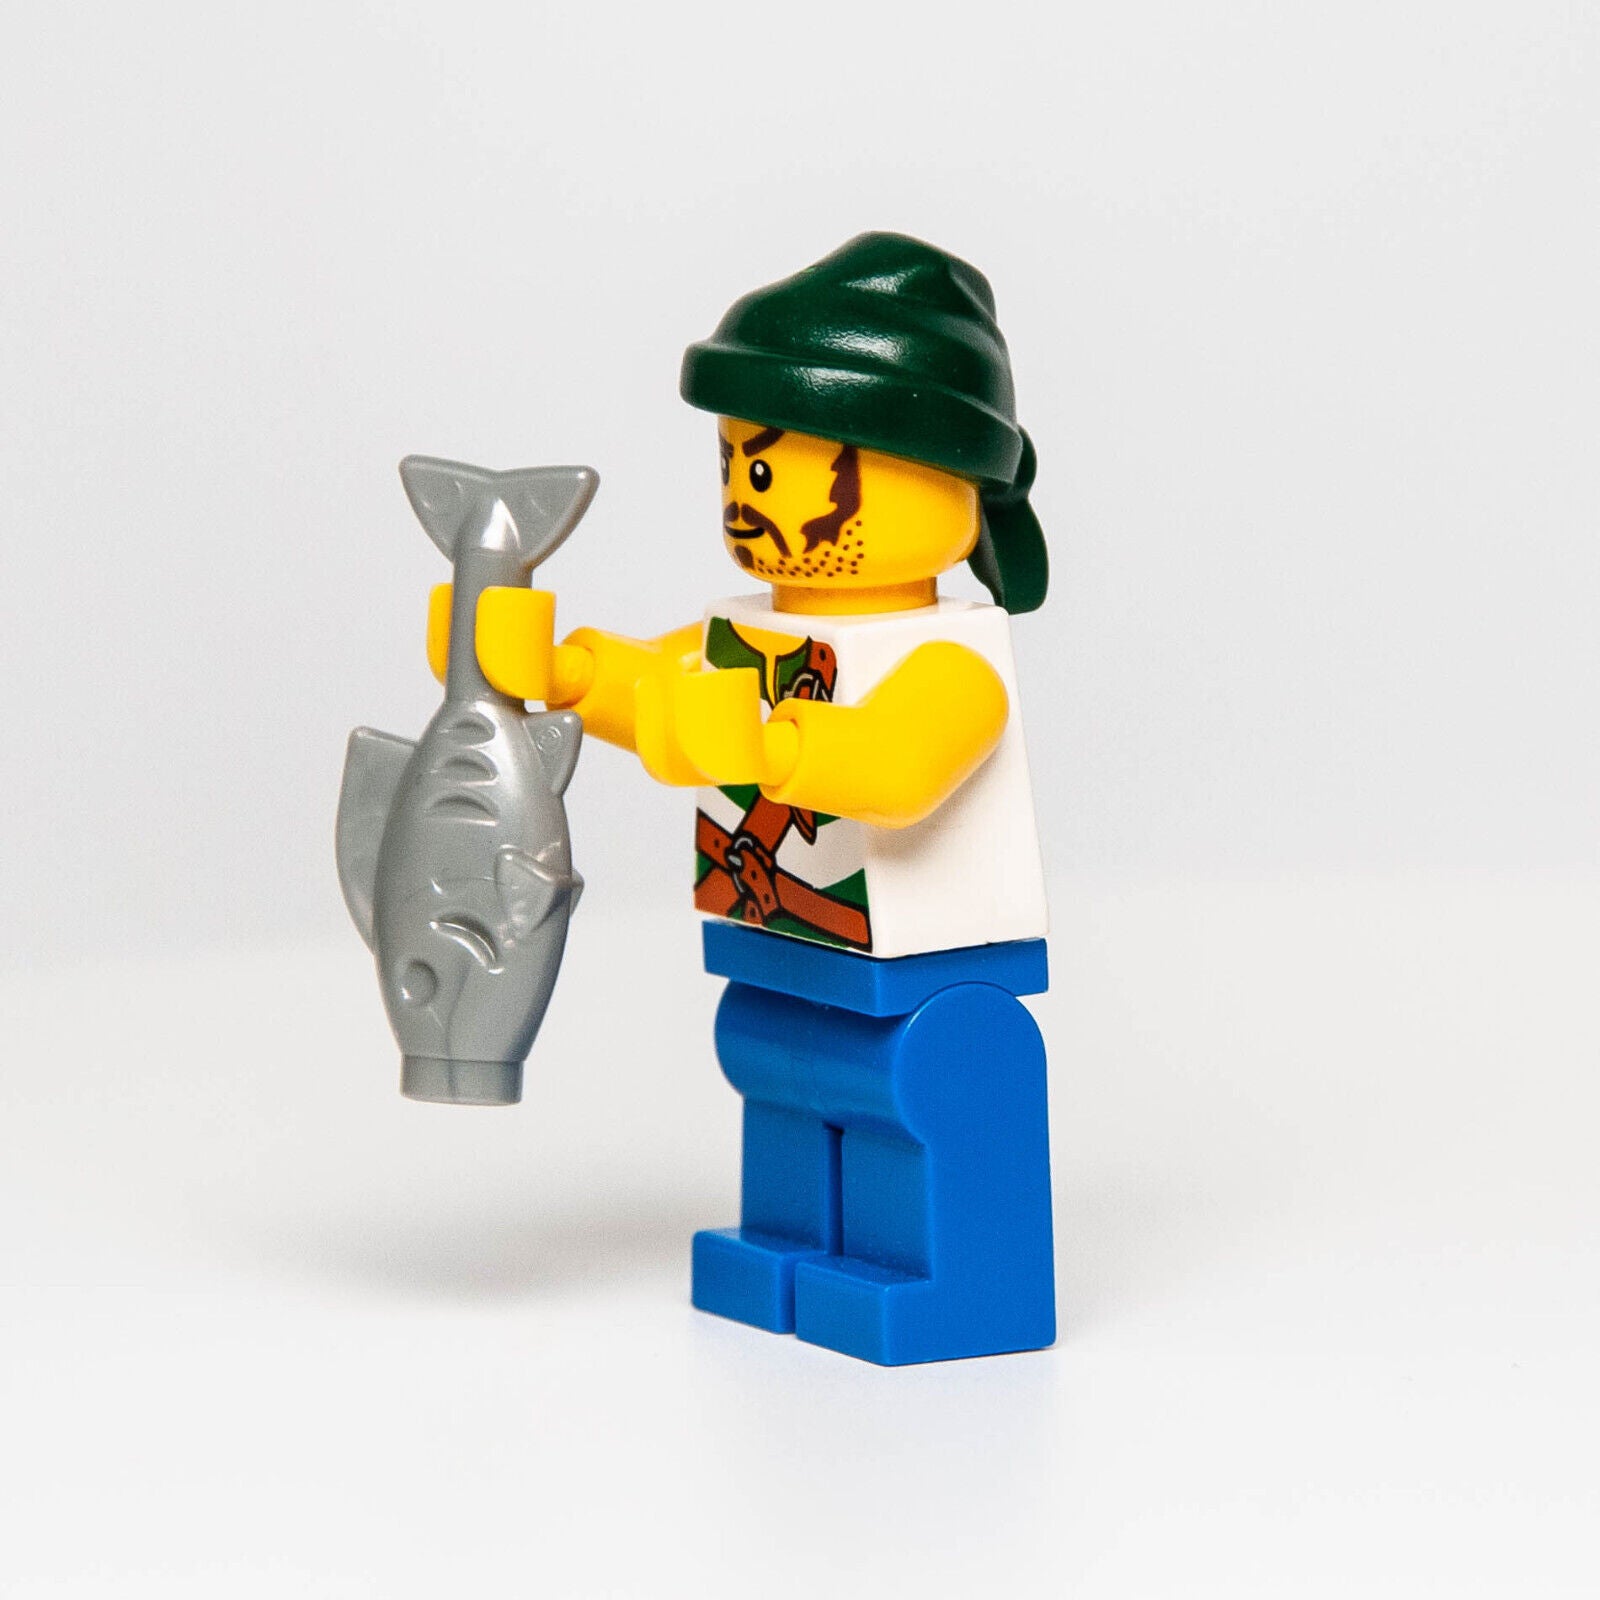 Lego Pirate With Green Bandana, Fish Minifigure (pi132)